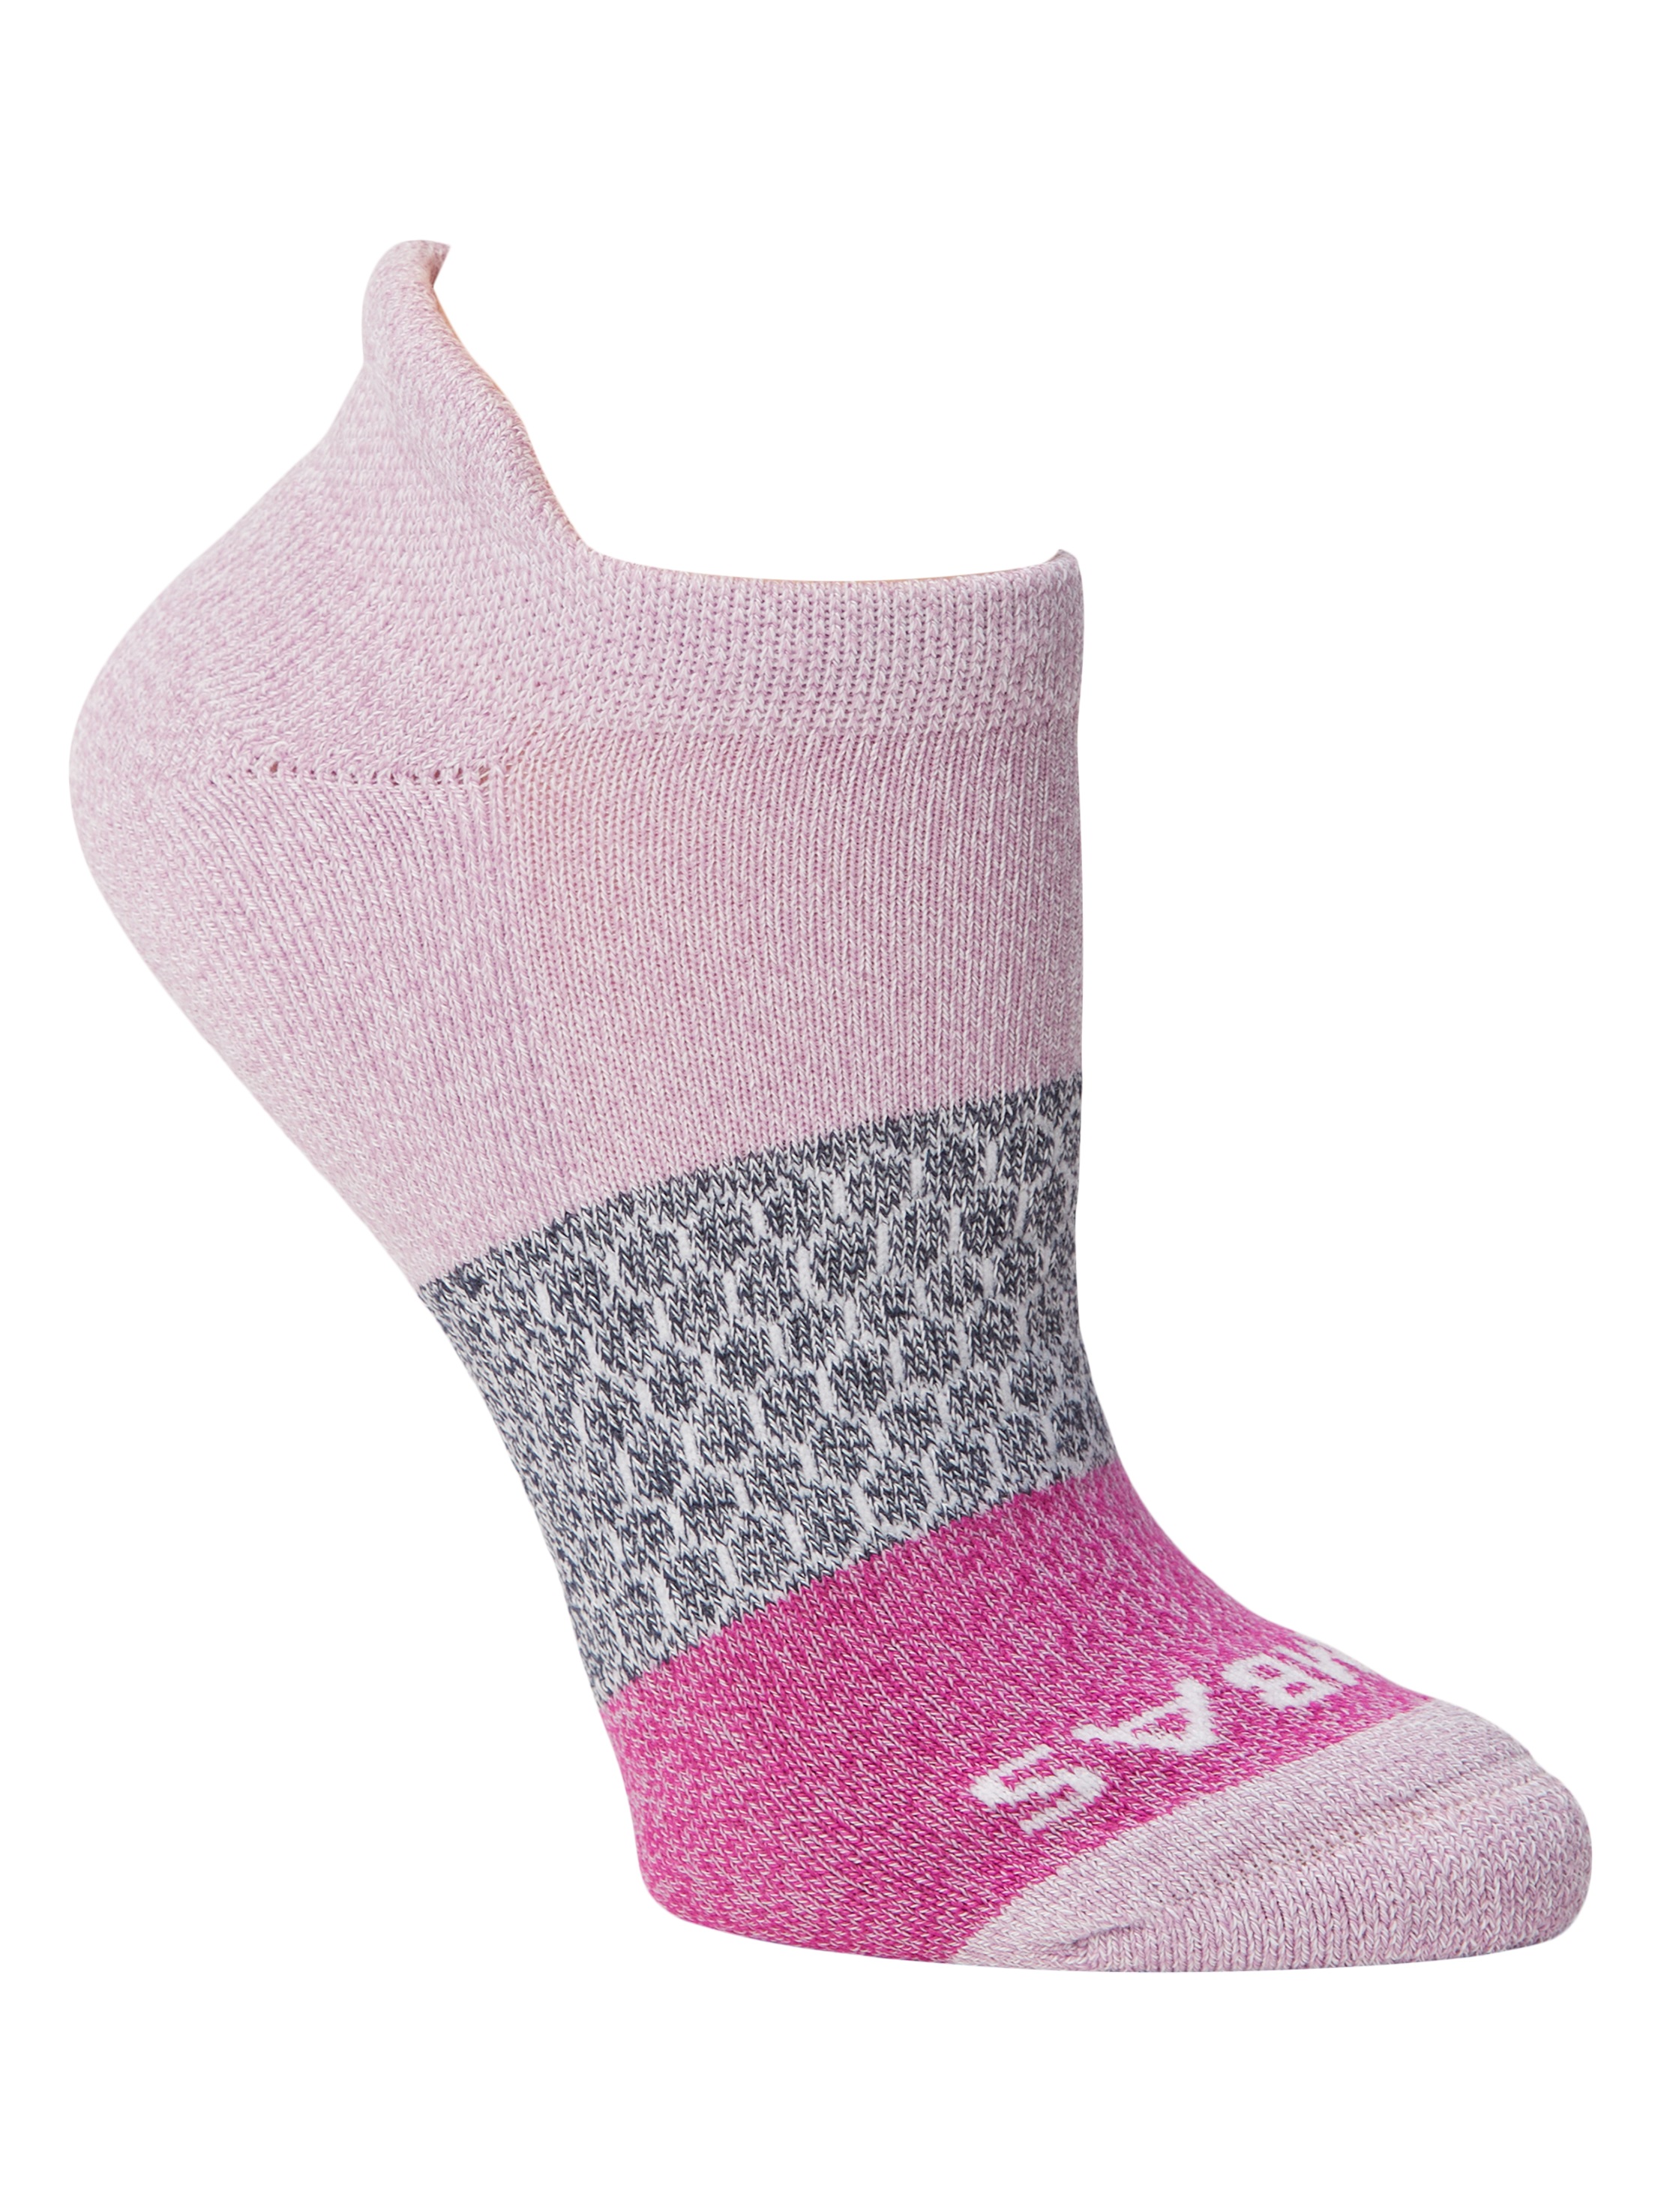 Light Grey Heather and Royal Bombas Women's Tri-Block Ankle Socks Medium